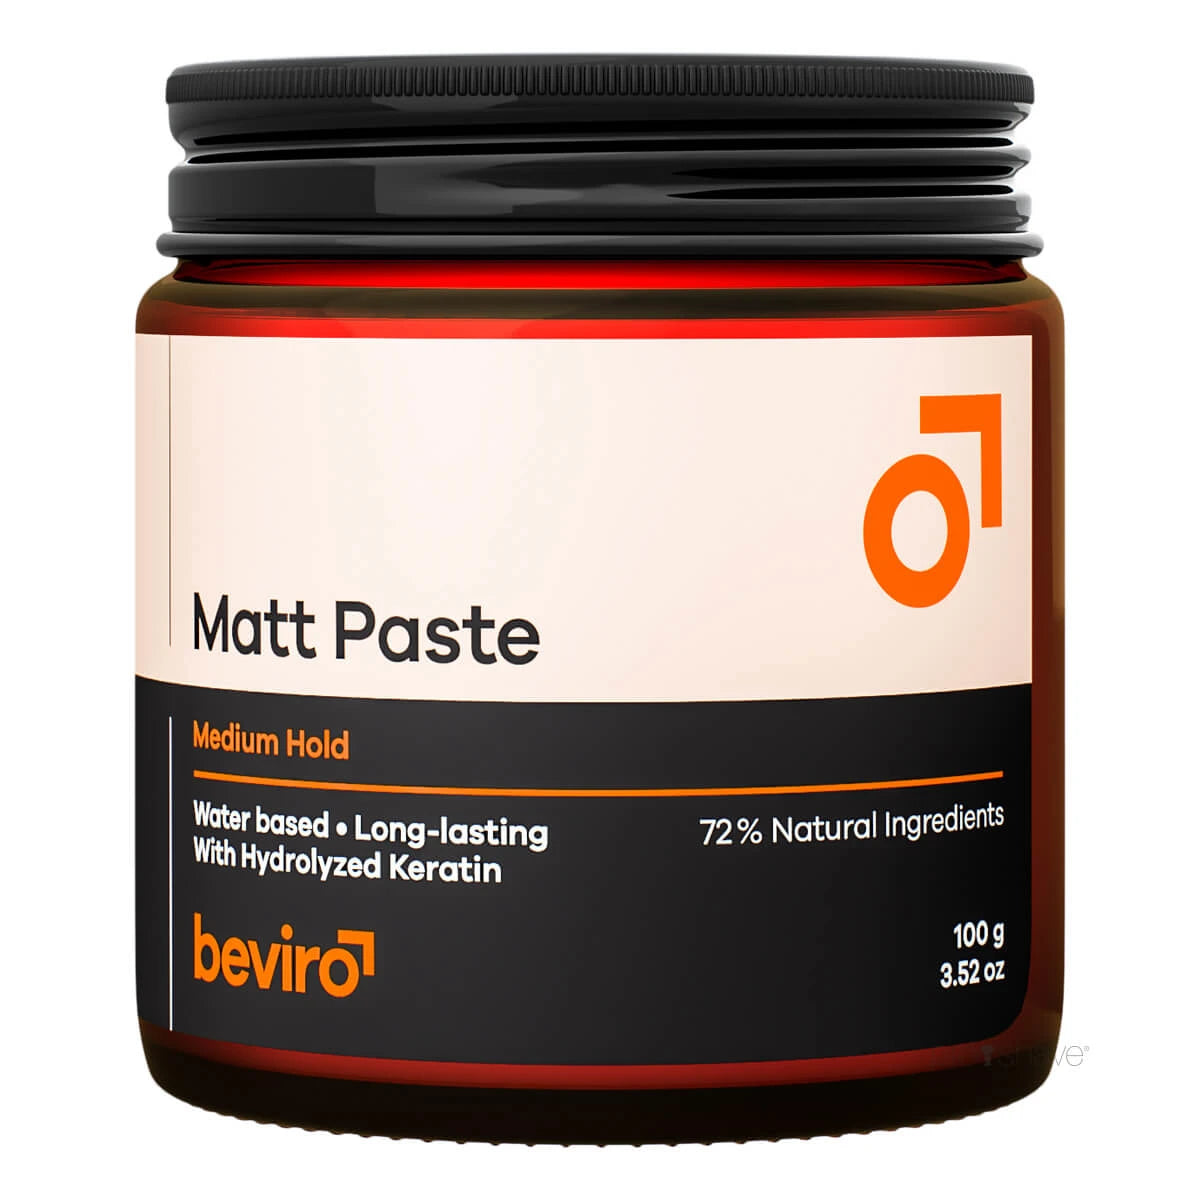 Beviro, Matt Paste- Medium Hold